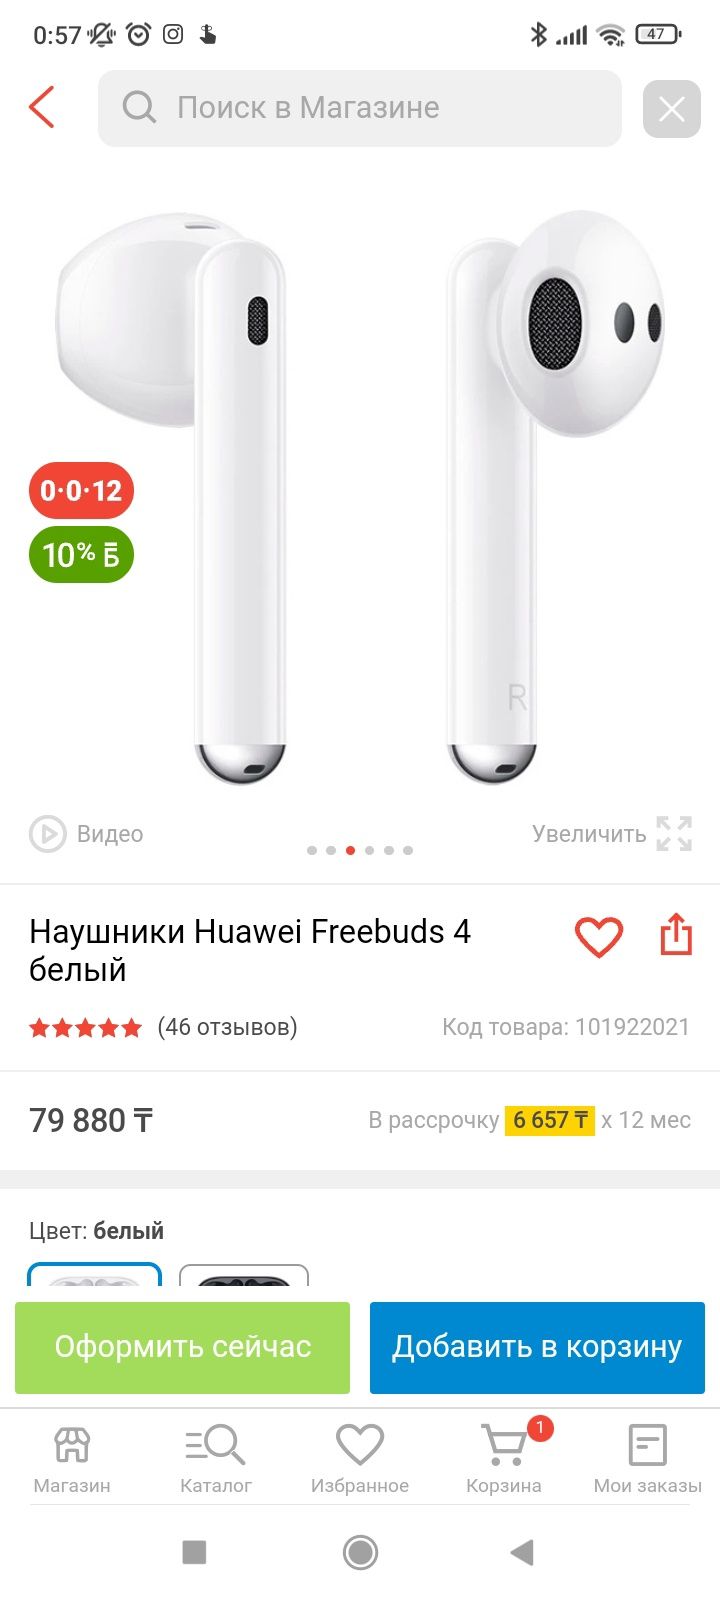 Huawei freebuds 4 белый